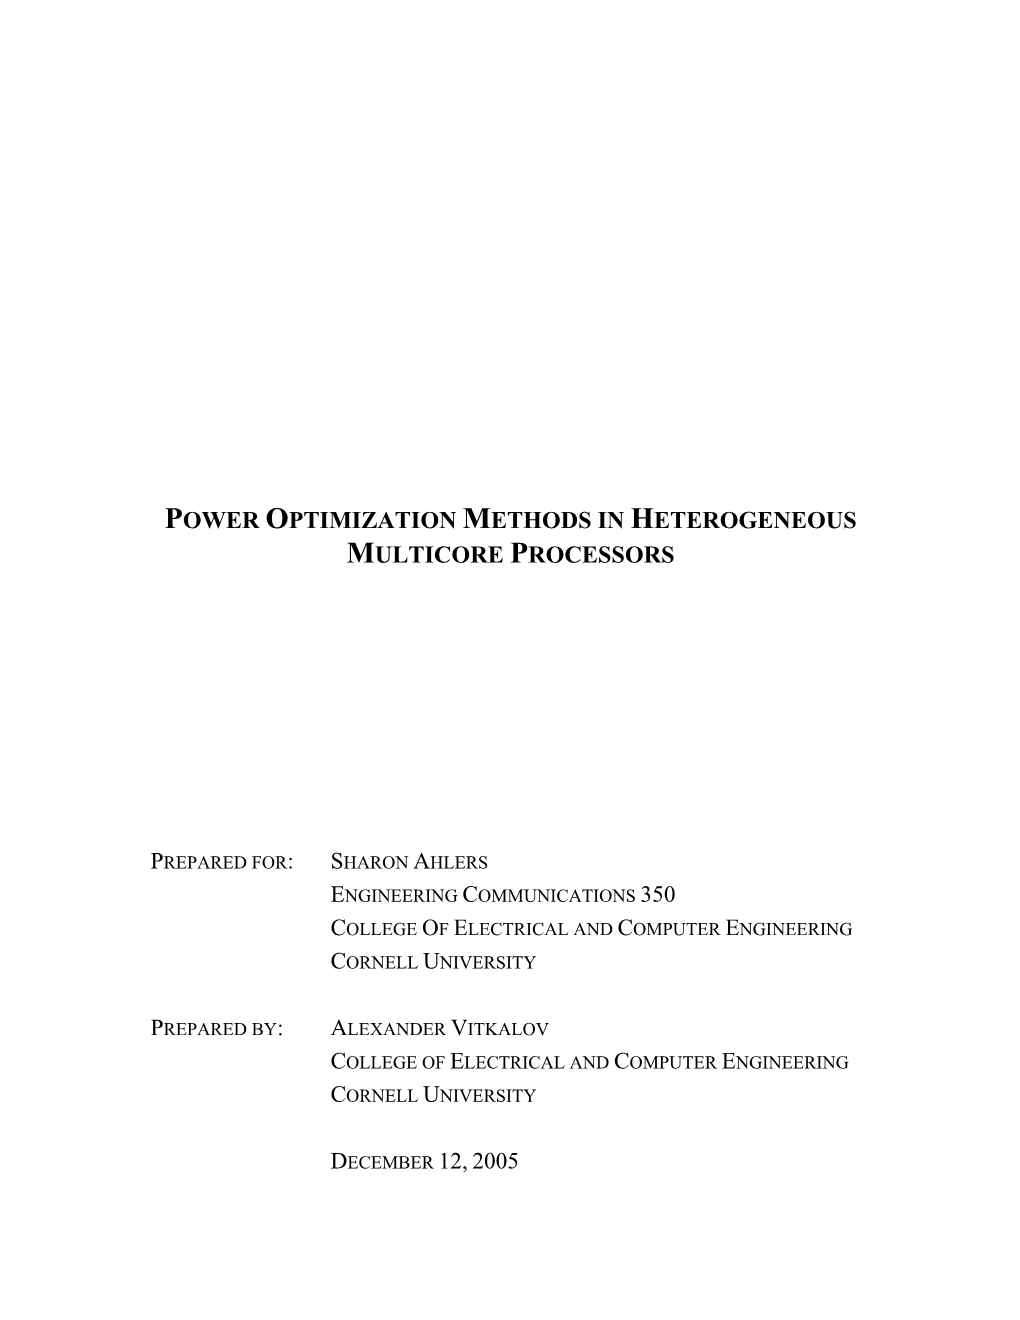 Power Optimization Methods in Heterogeneous Multicore Processors